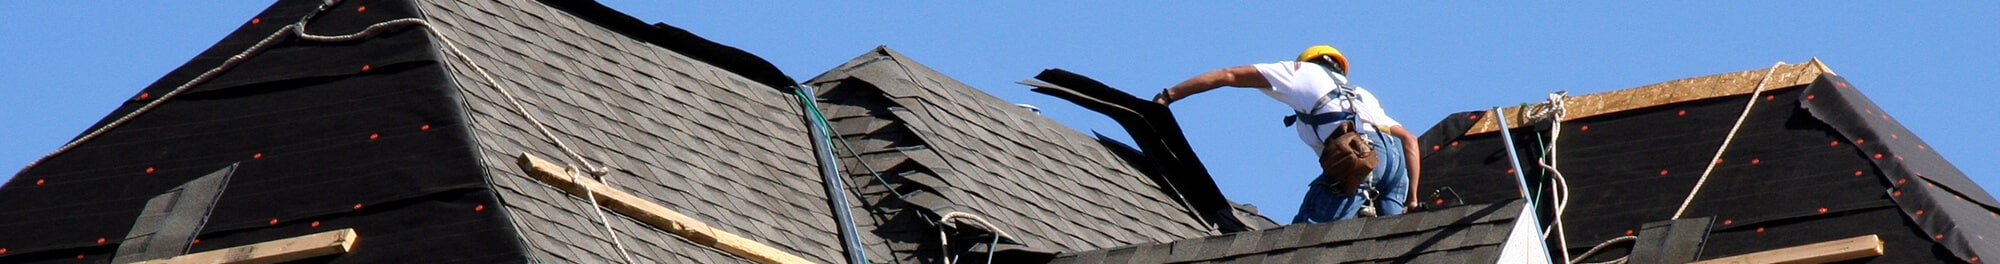 Kenosha roof replacement company